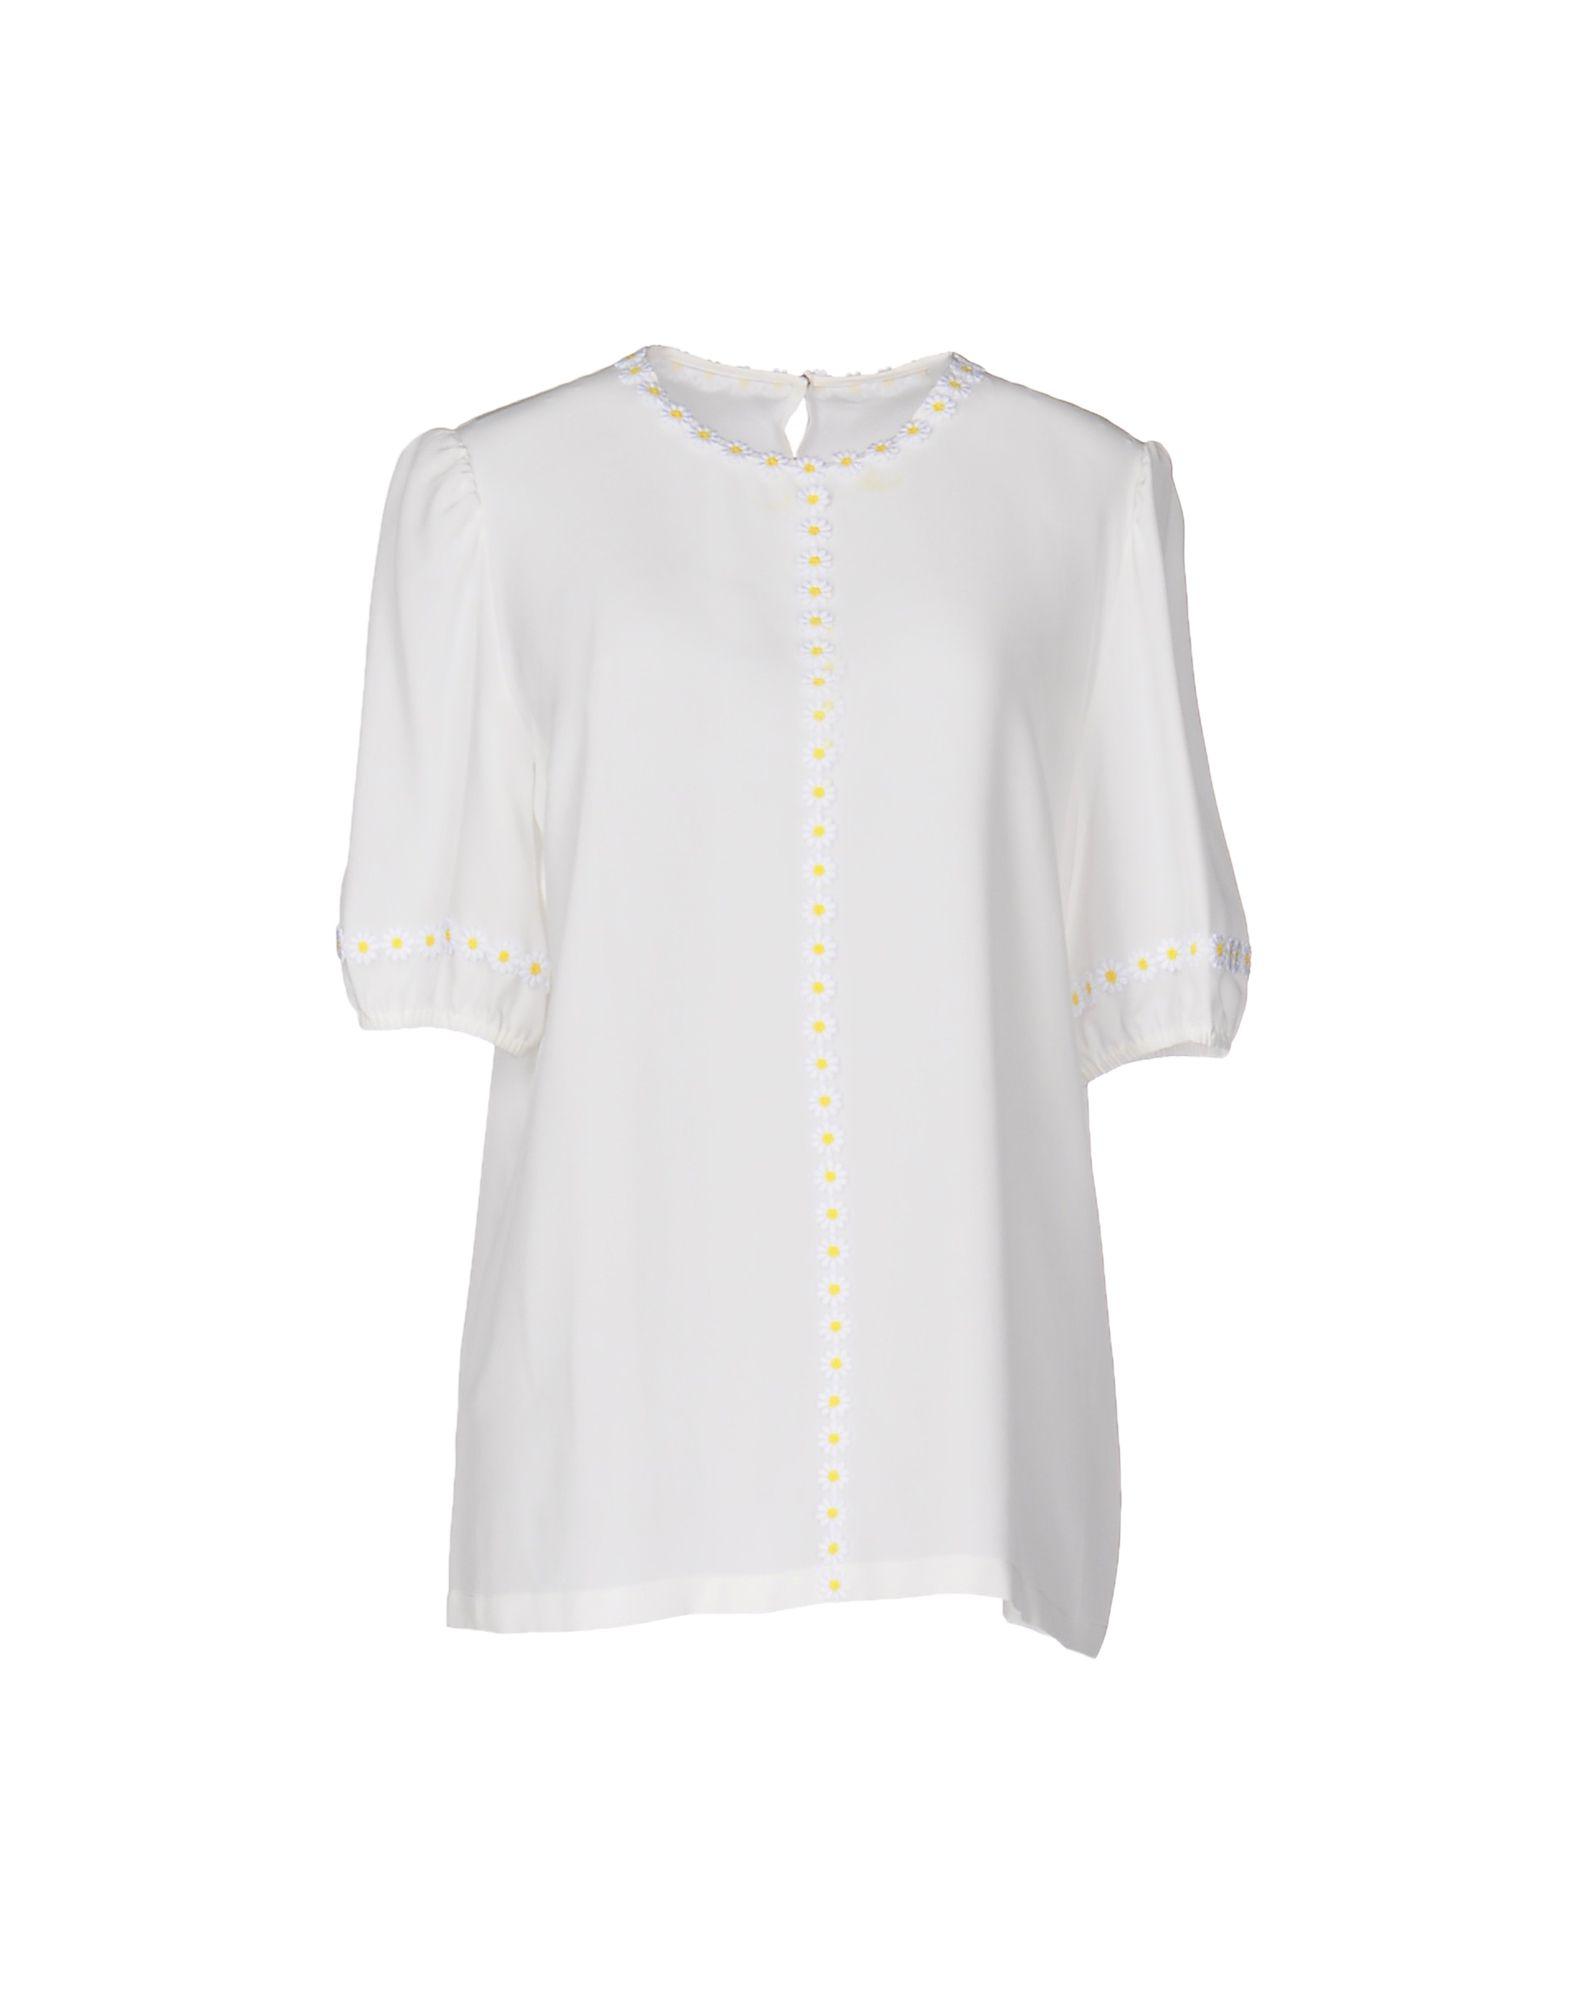 Dolce & Gabbana Silk Blouse in White - Lyst